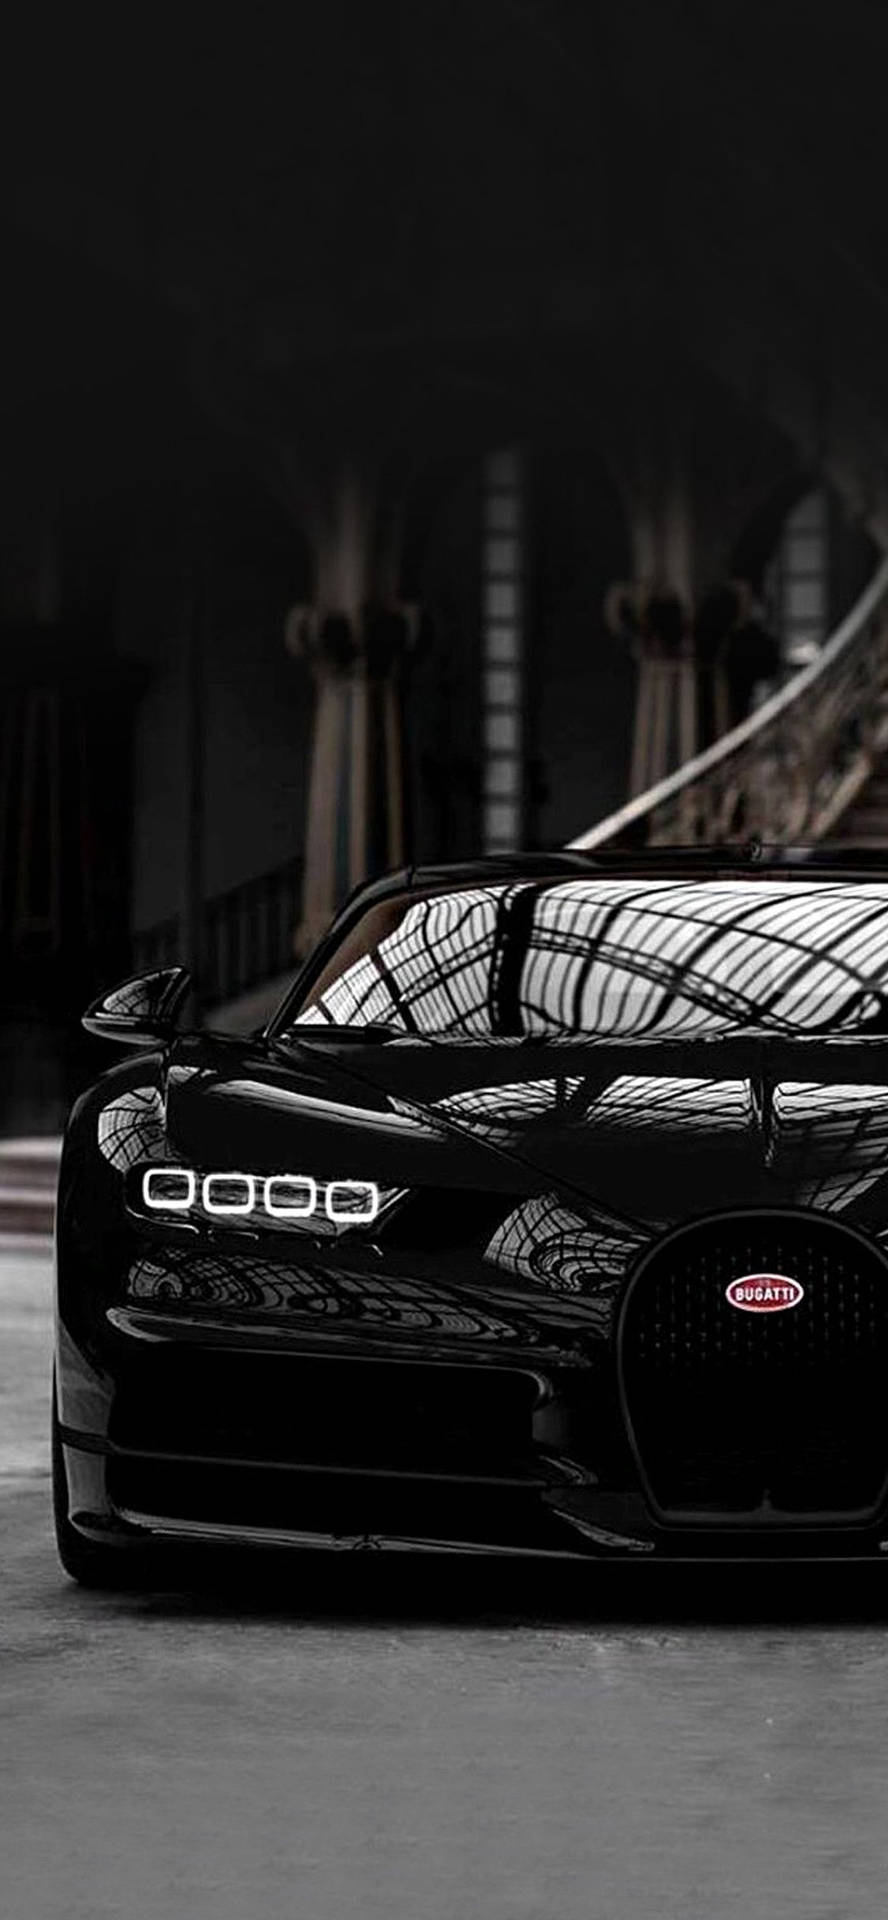 Black Bugatti Chiron Iphone Car Wallpaper